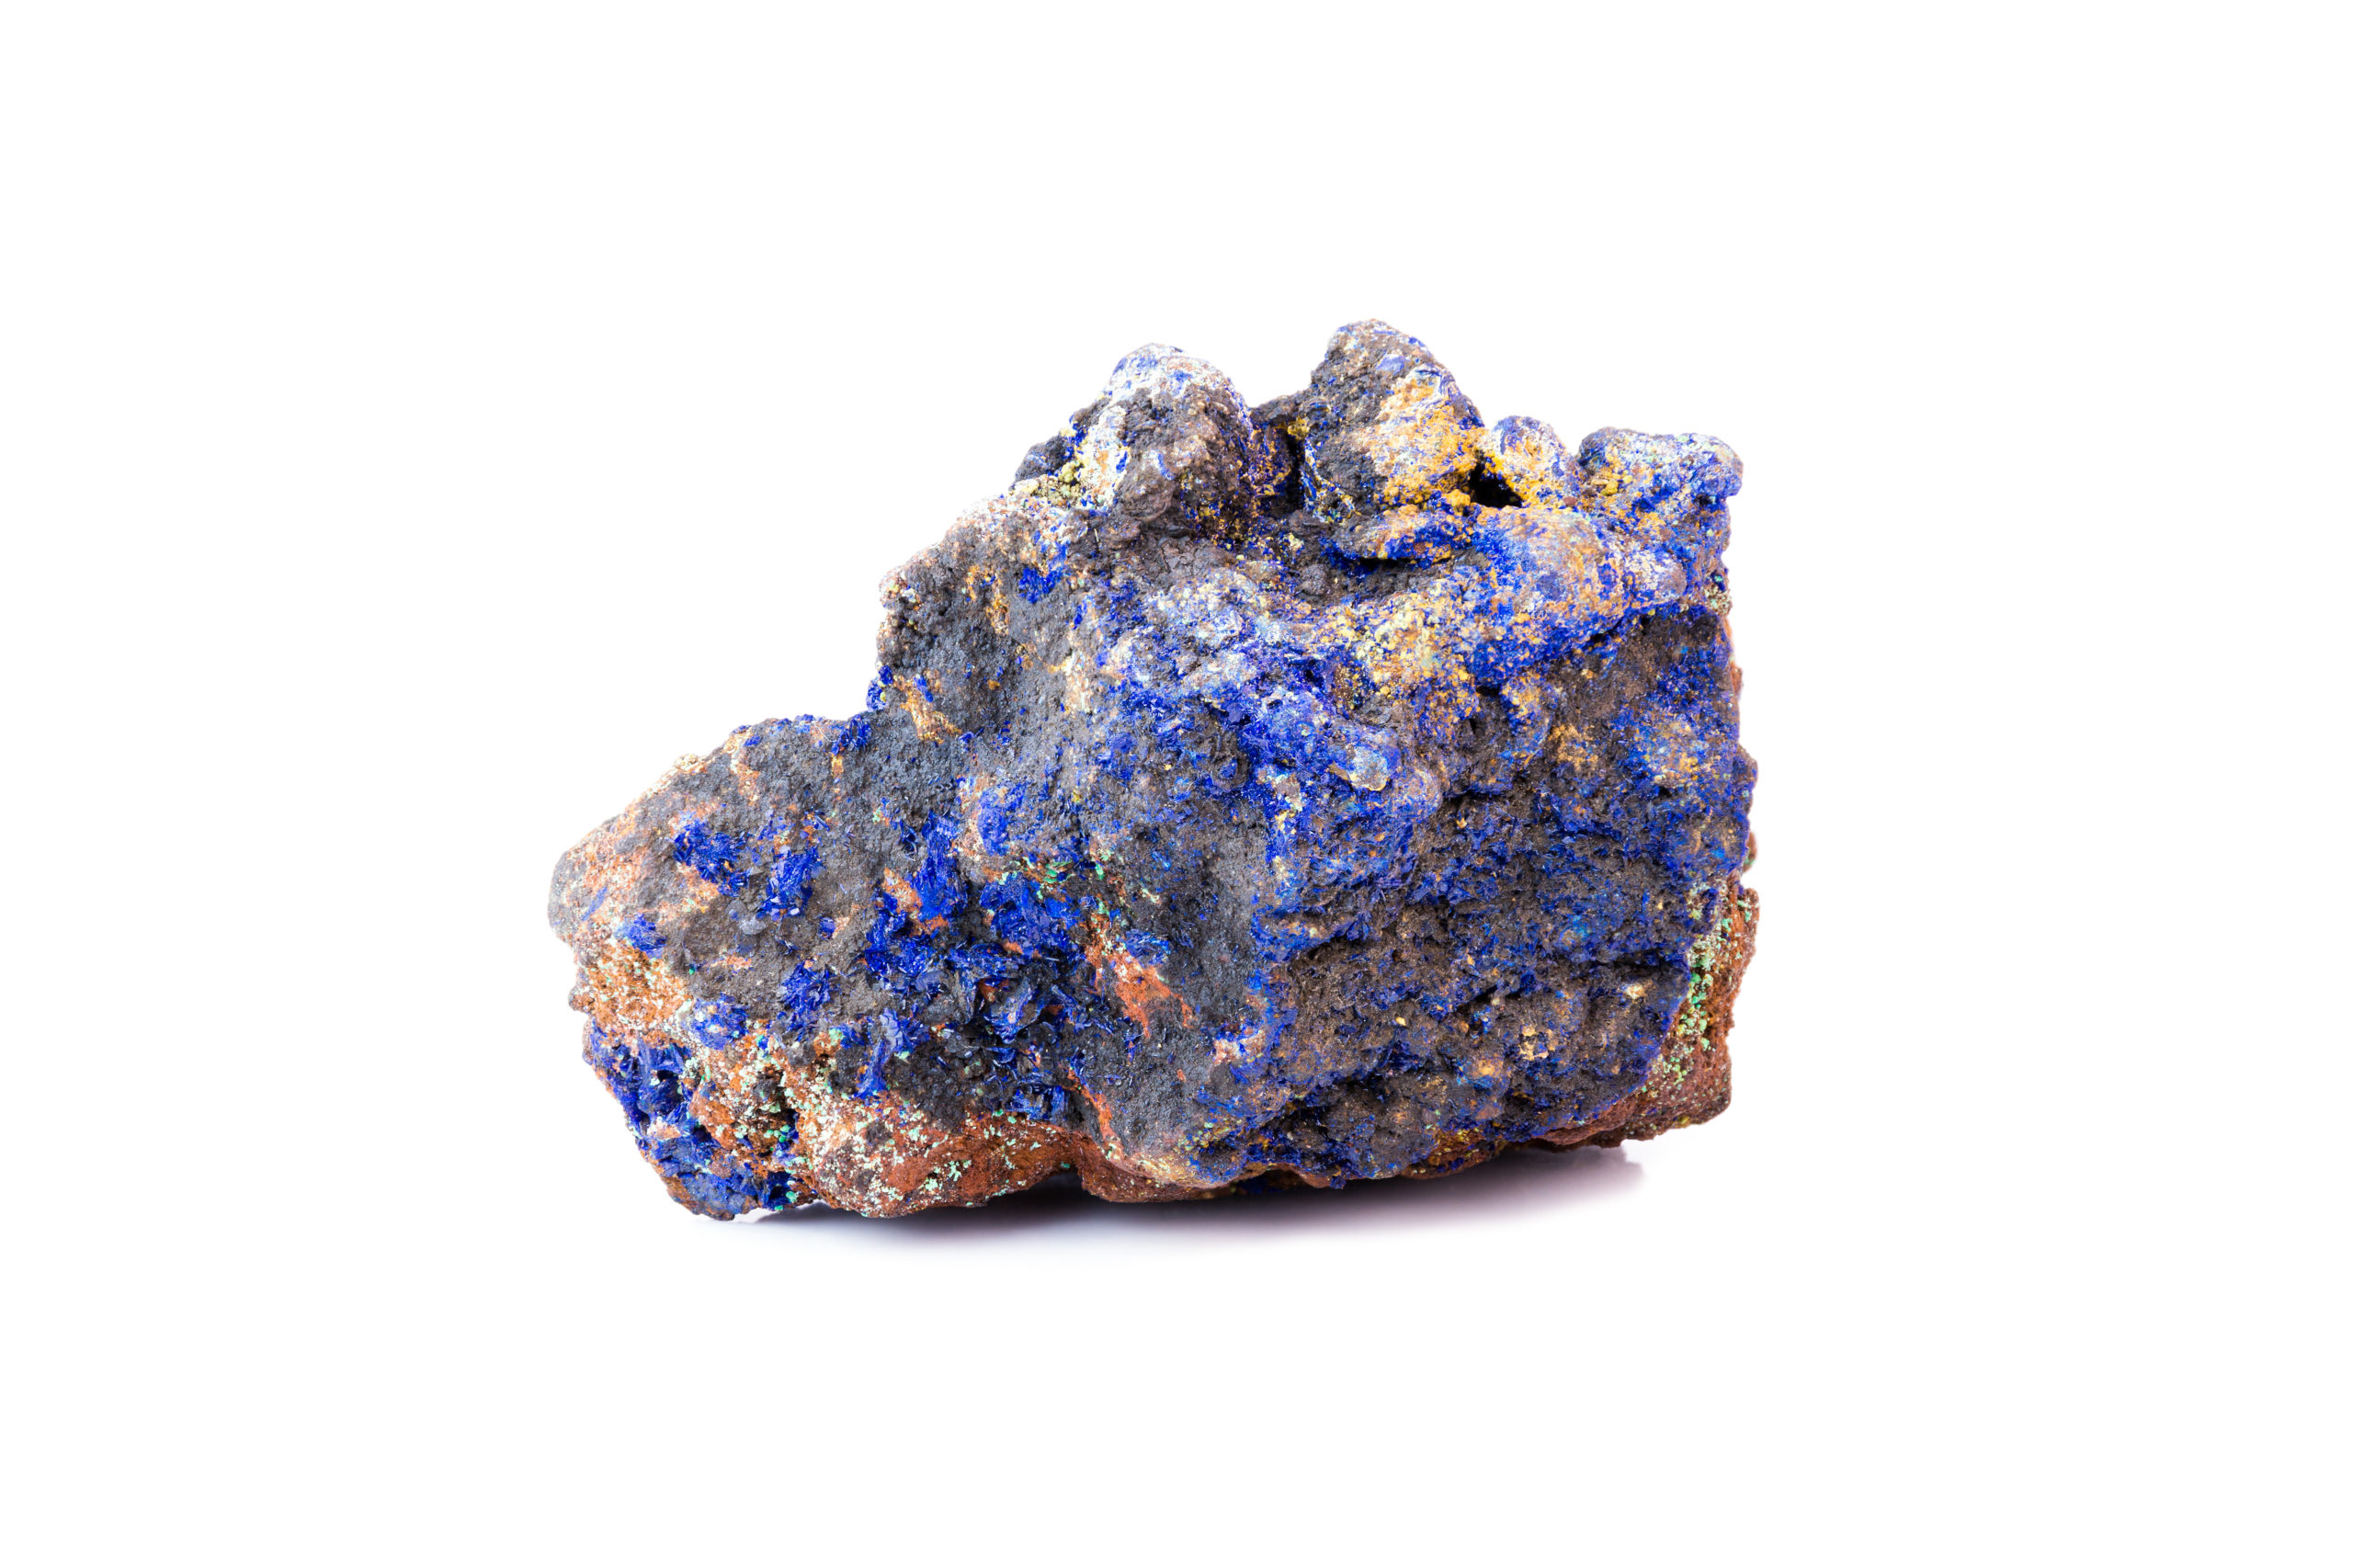 Earths cobalt deposits formed much earlier than 